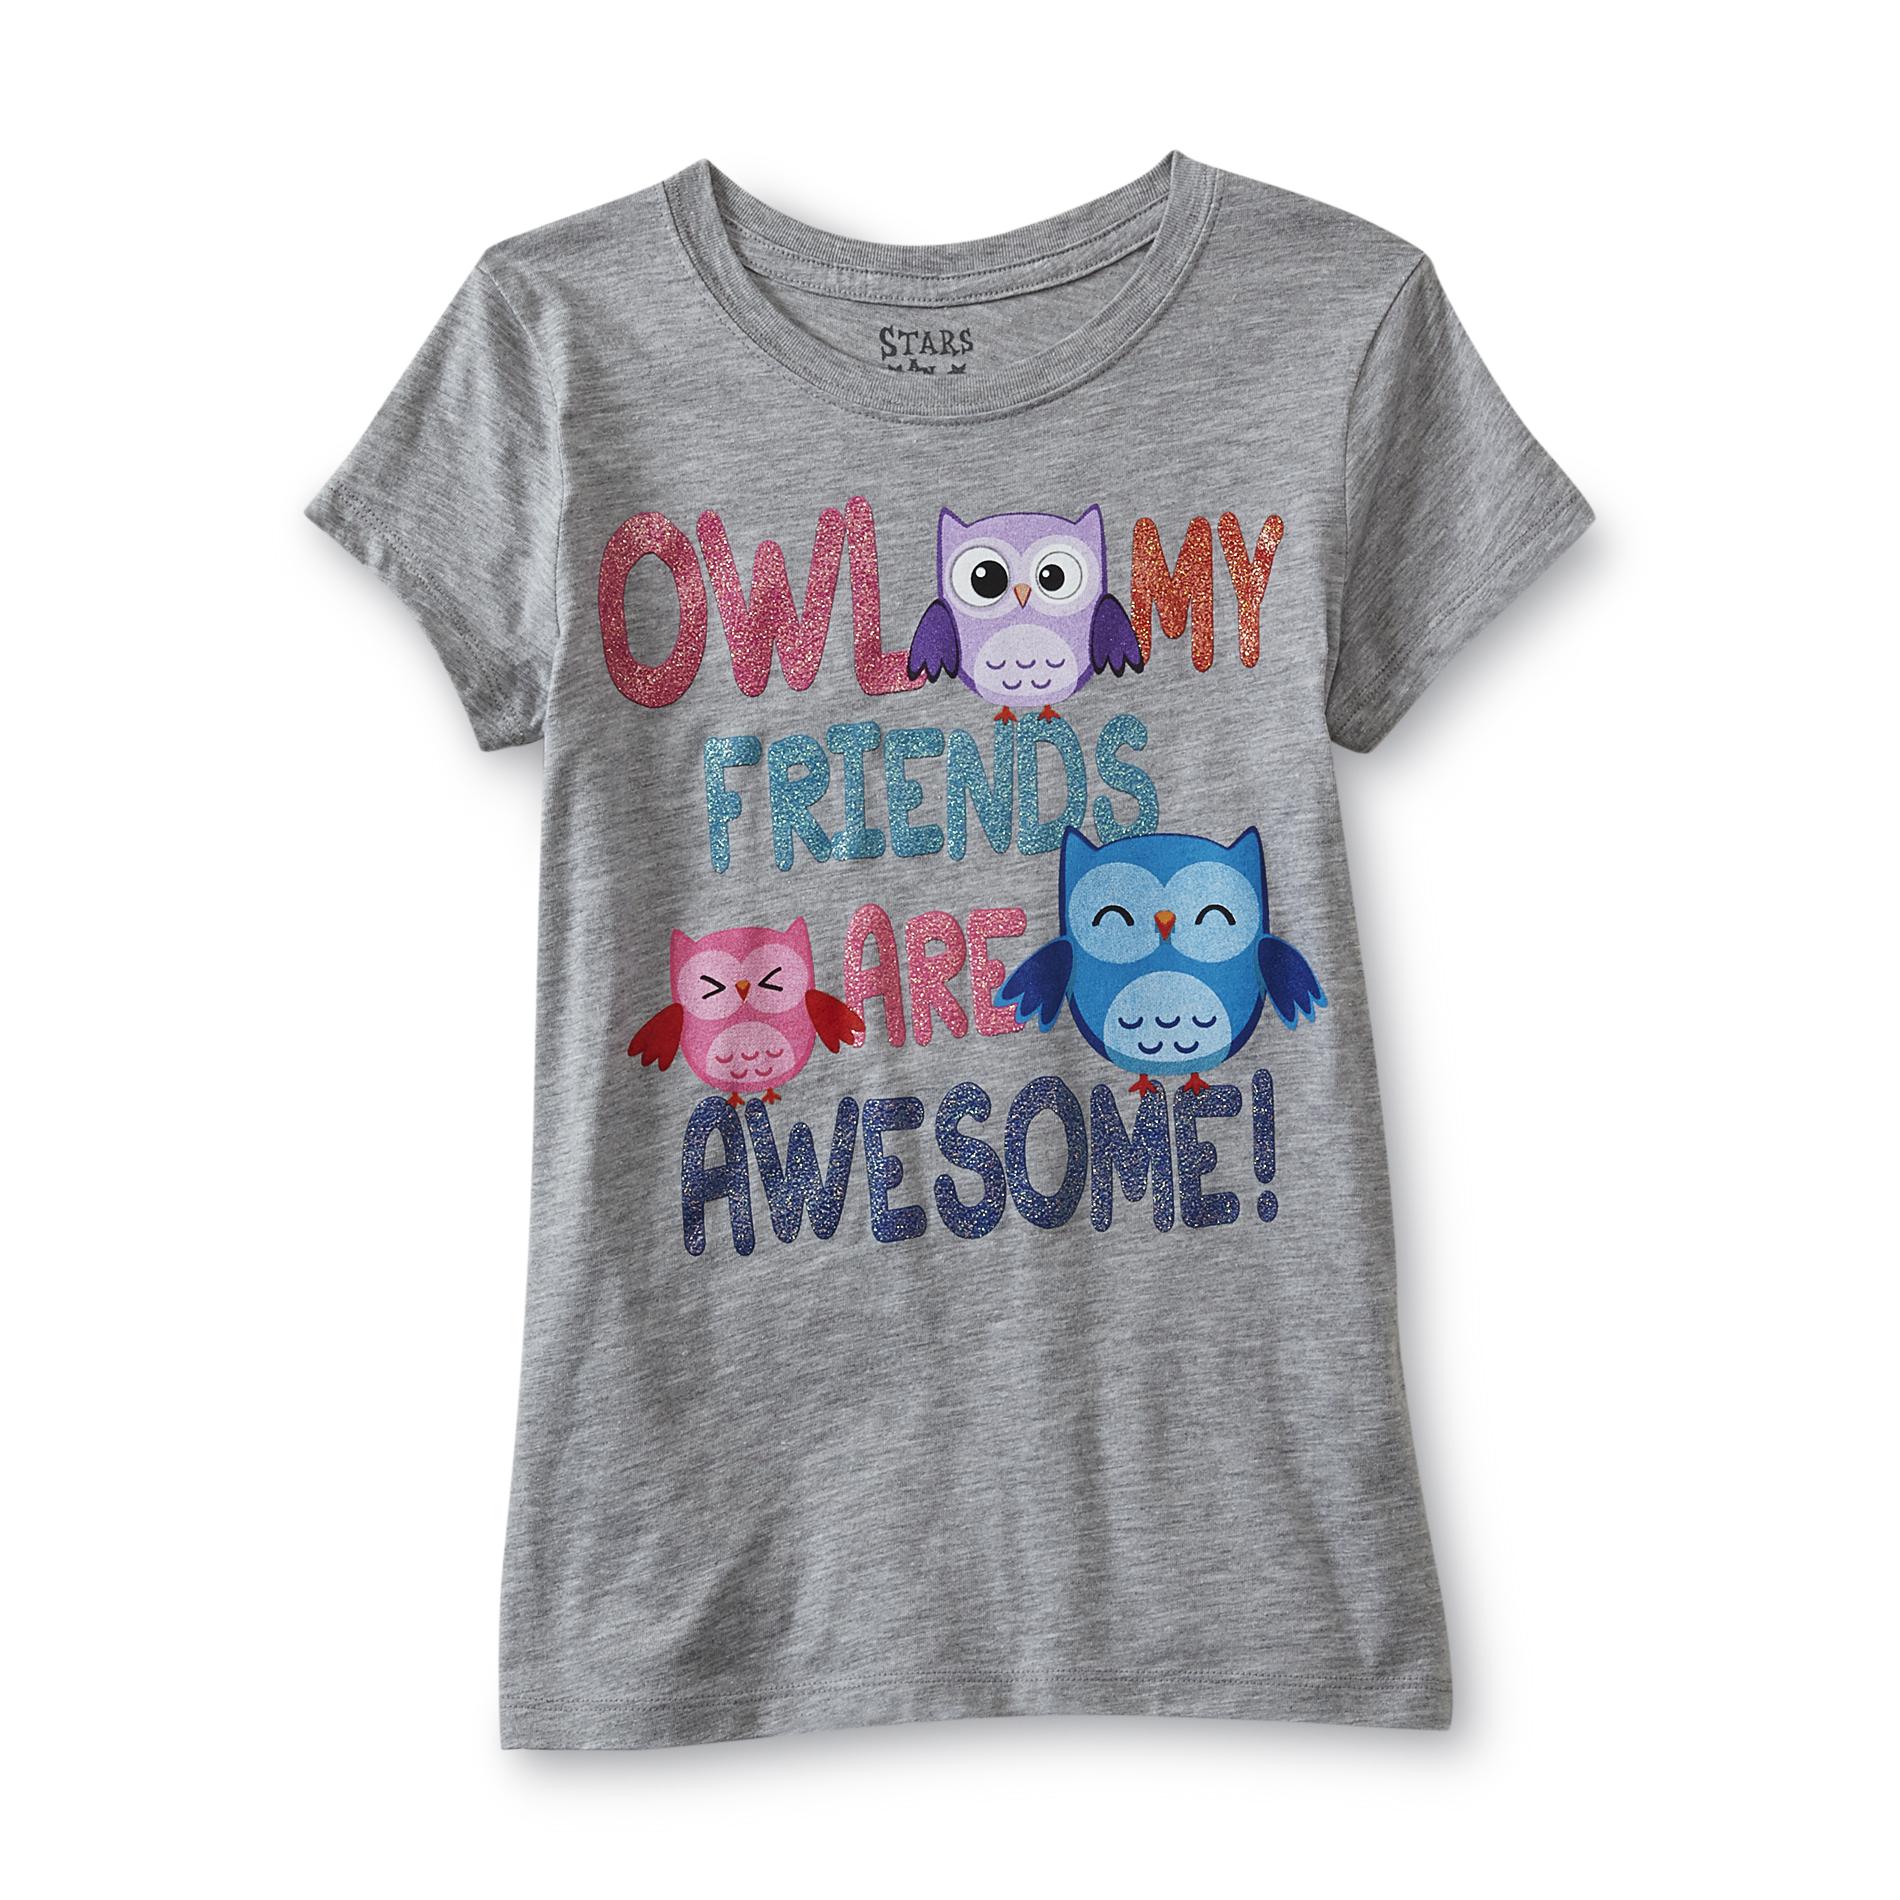 Hybrid Girl's Graphic T-Shirt - Owl Friends